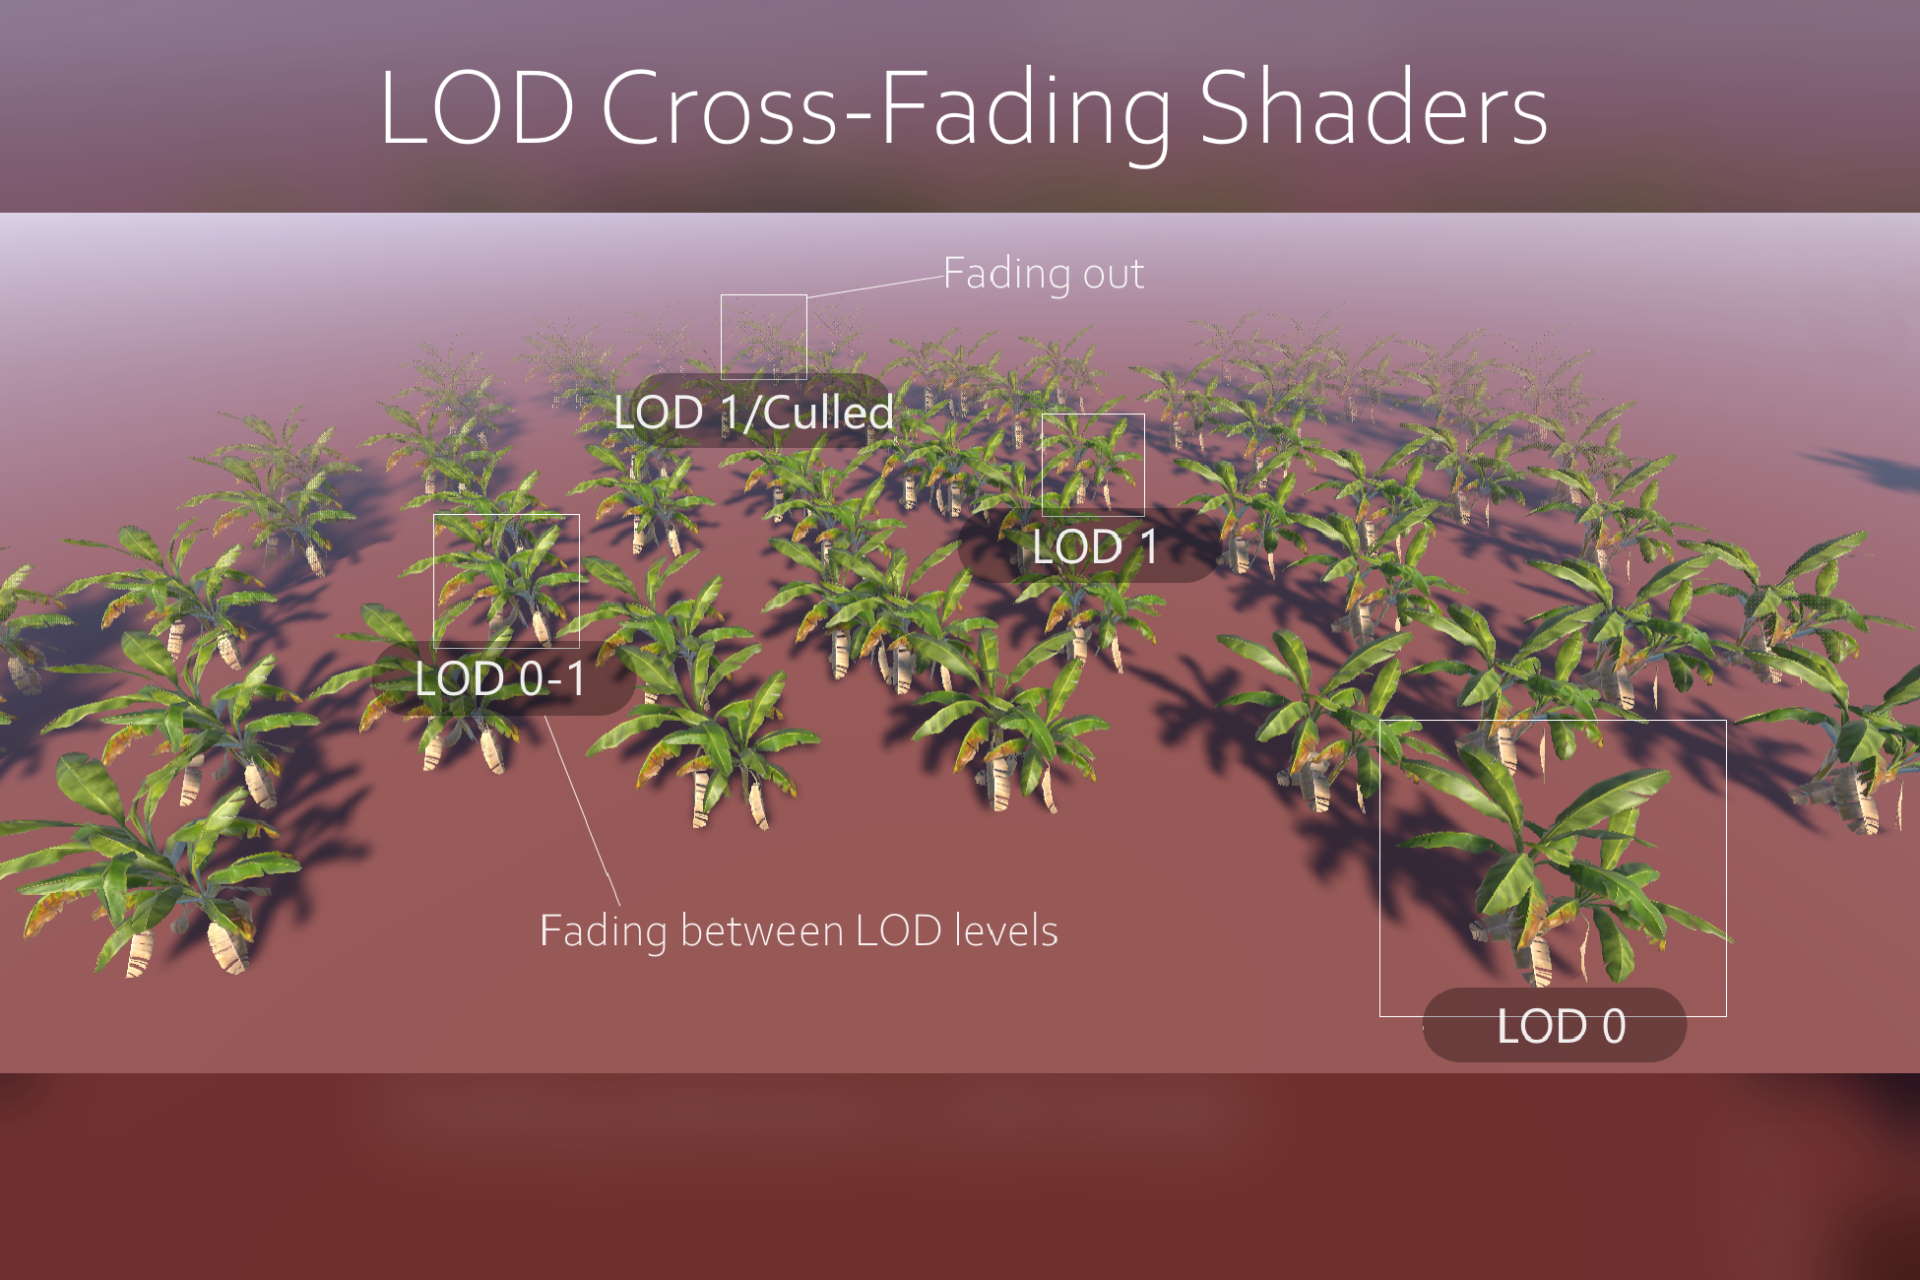 Lod crossfading shaders intro image